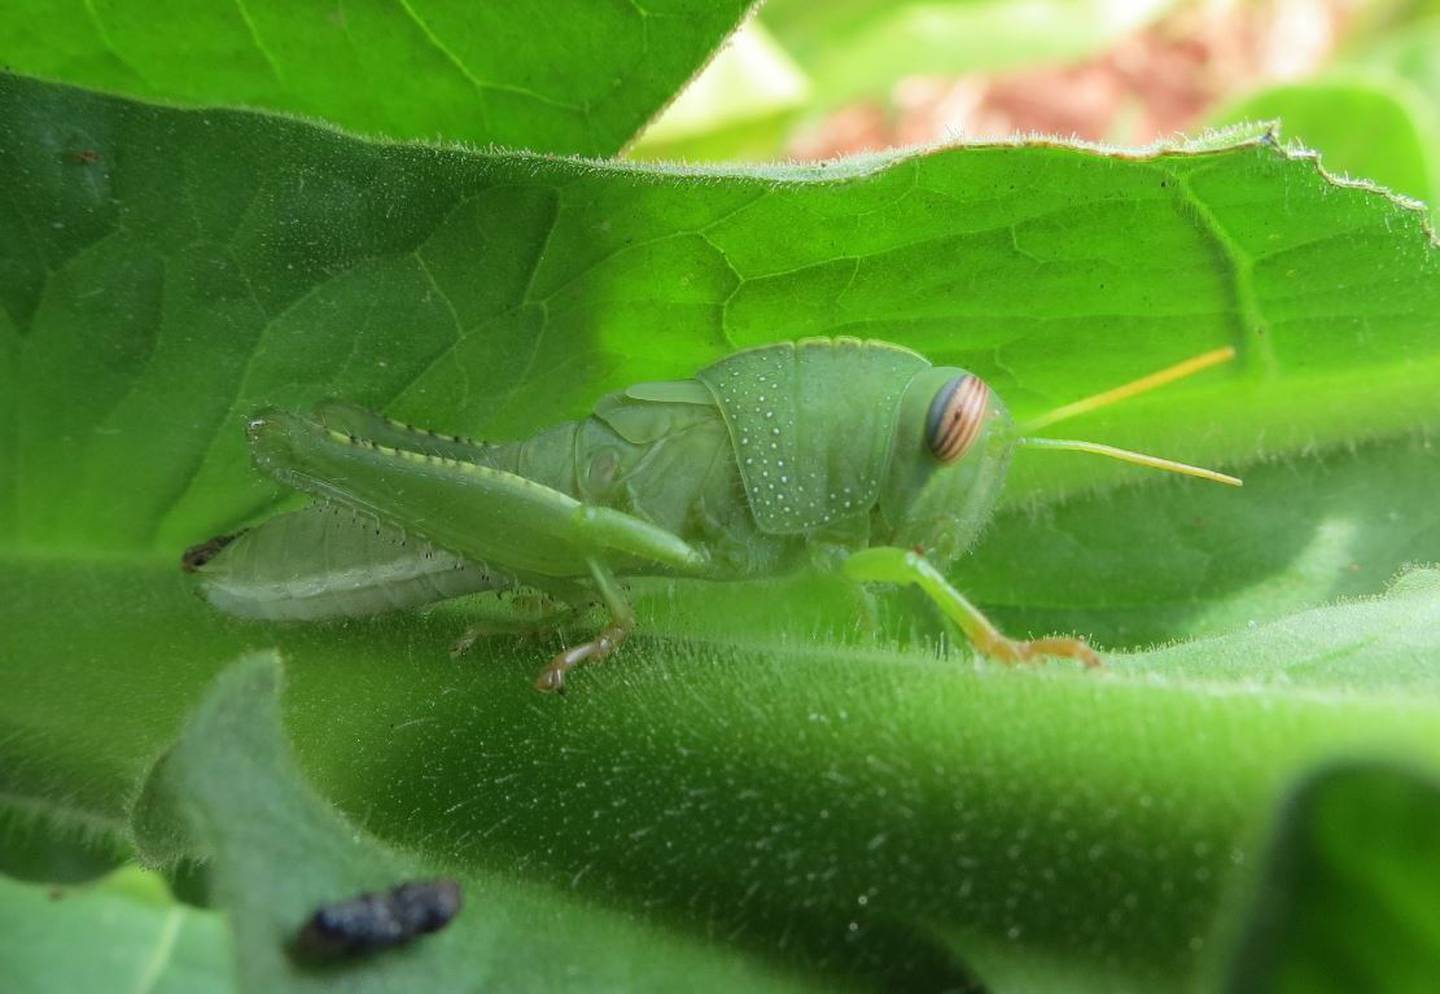 Young Egyptian grasshopper